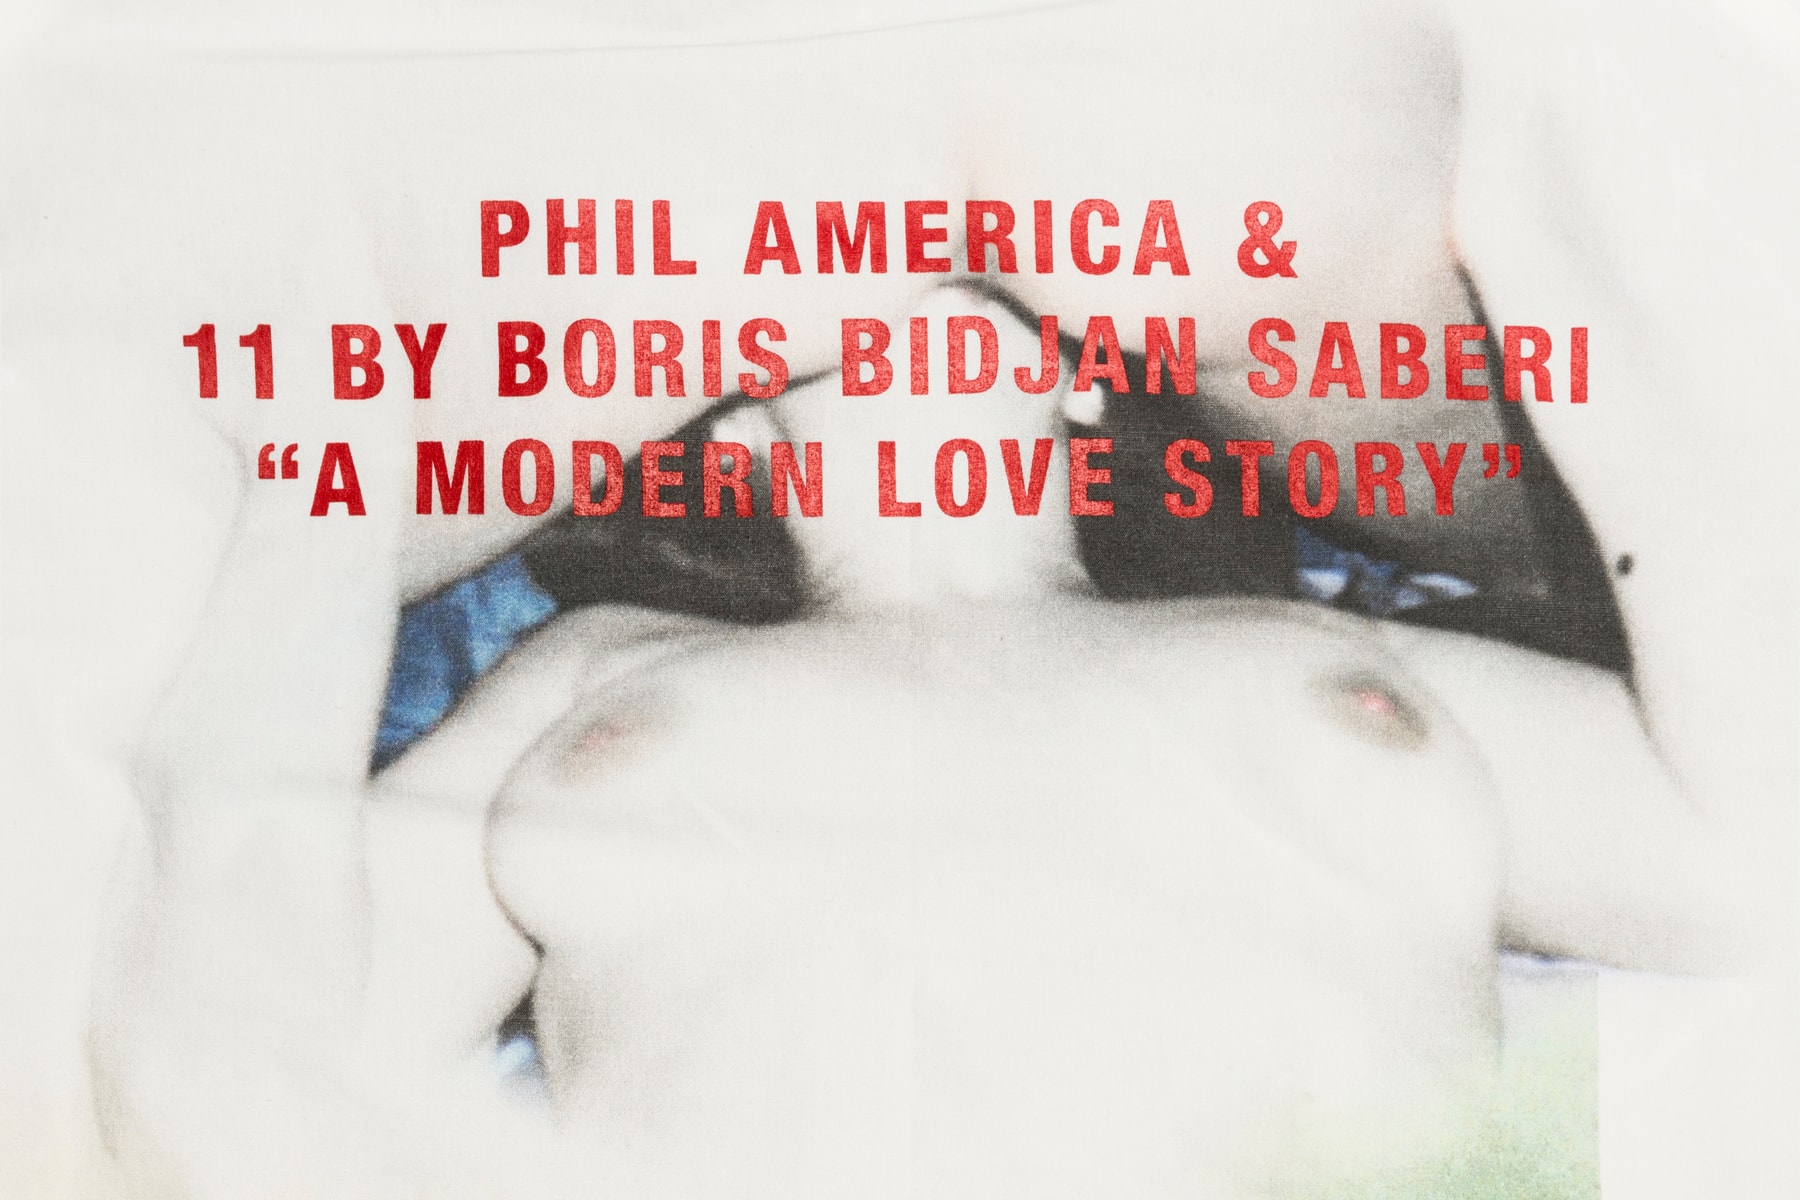 Phil America 11 BY BORIS BIDJAN SABERI 11BYBBS A Modern Love Story Capsule Collection Bomber Jacket MA-1 Zip Up Hoodie T-Shirt Shorts